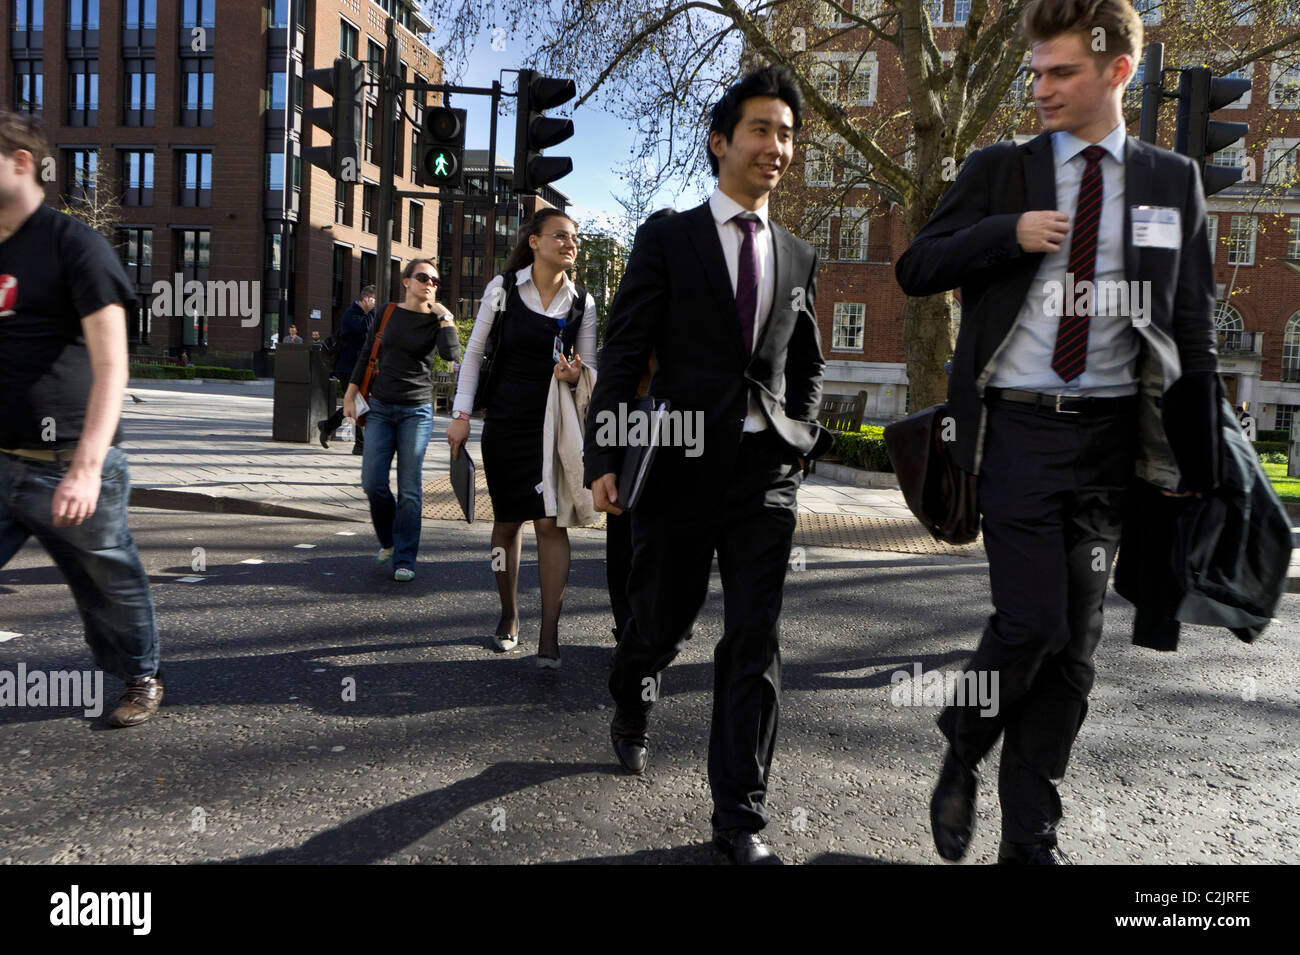 Pedestrians crossing street in London, England, UK Stock Photo